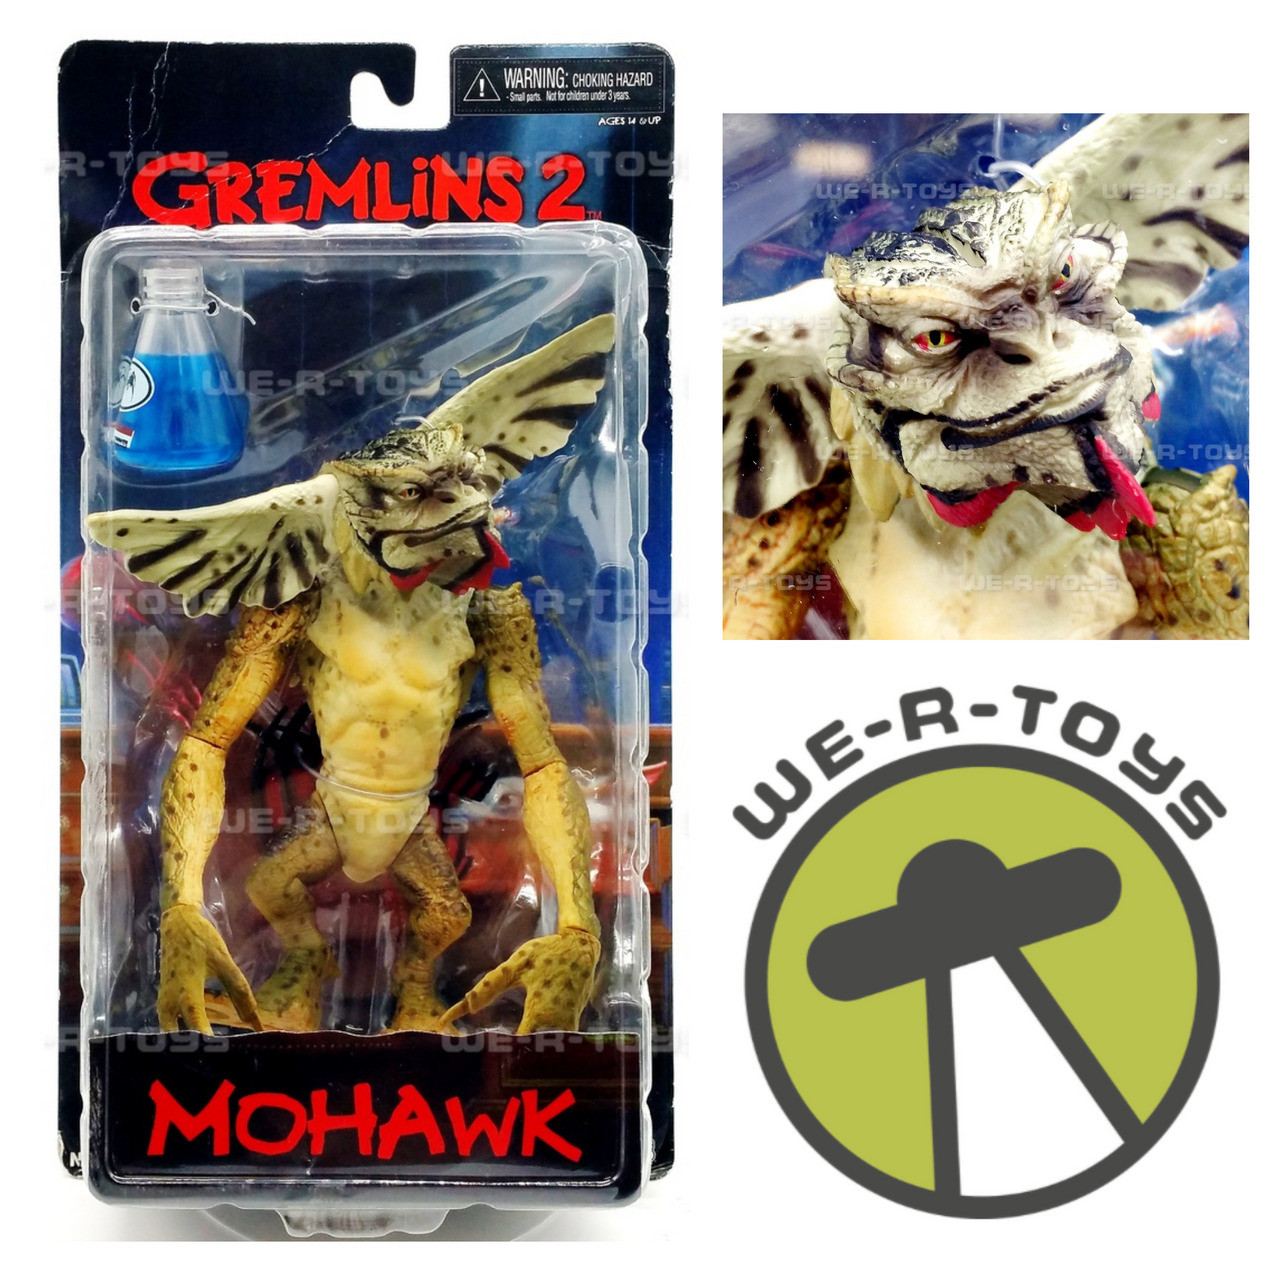 Neca - Gremlins figurine Mohawk 15 cm - We-R-Toys